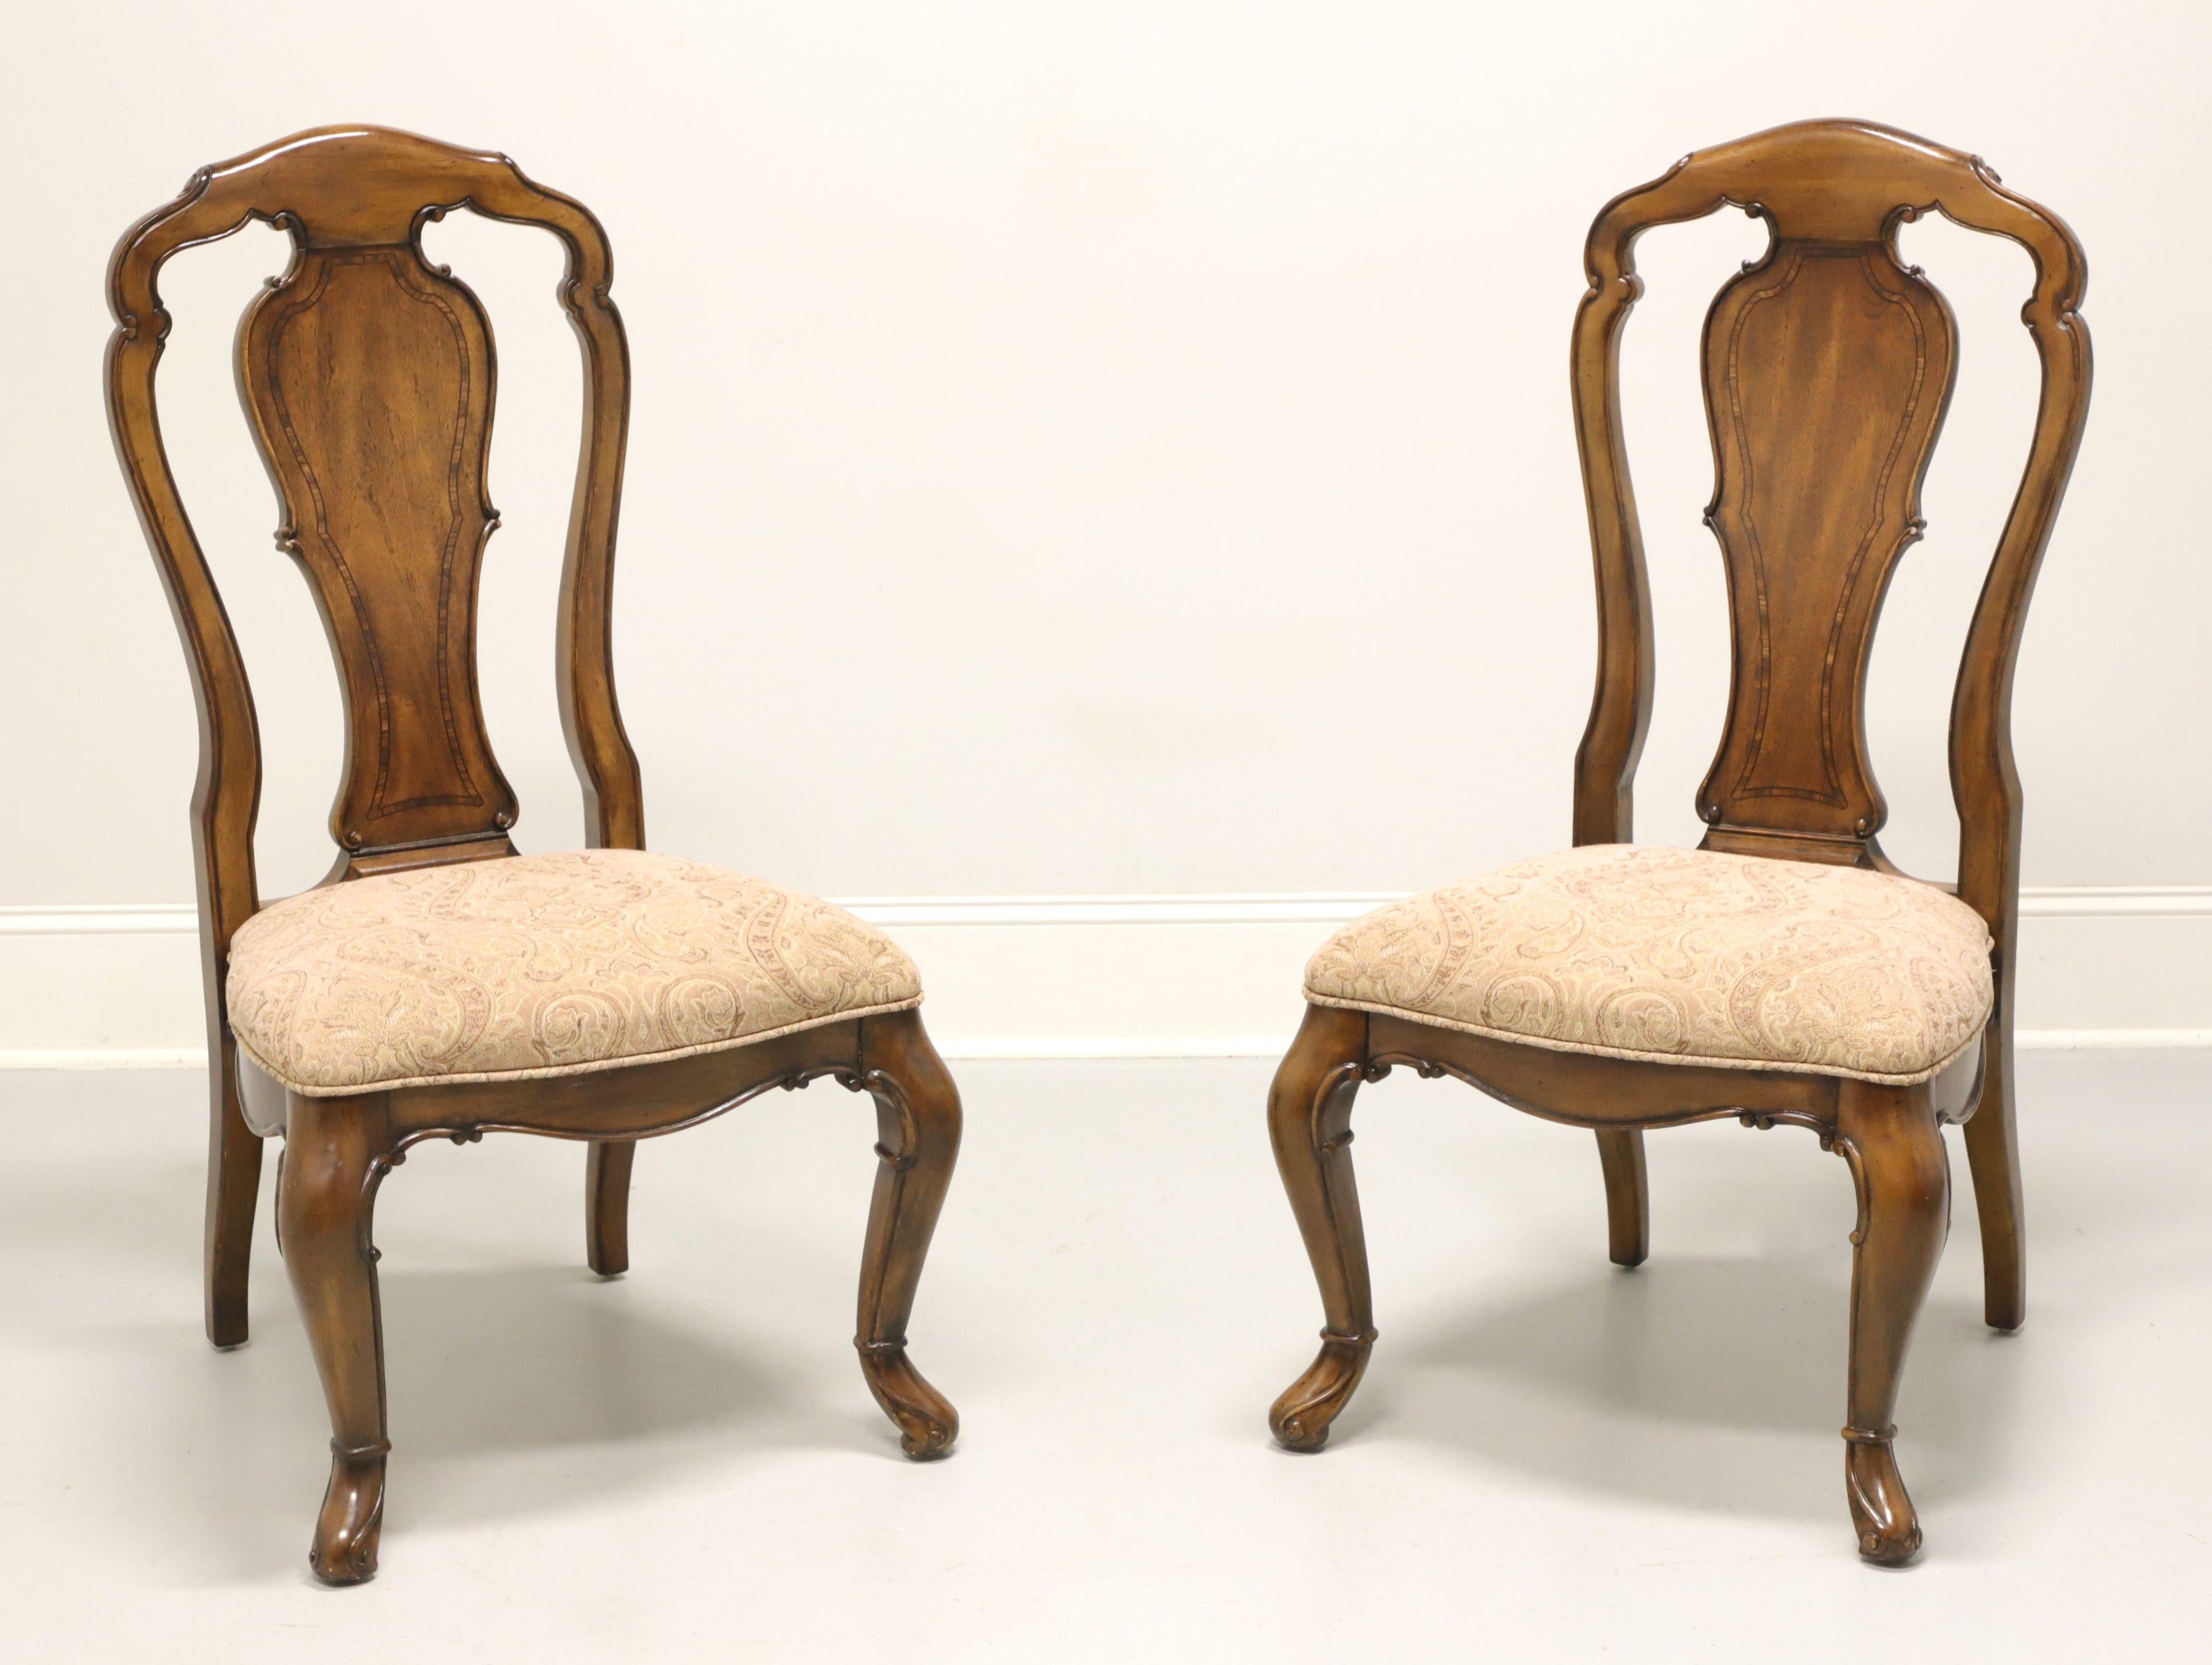 THOMASVILLE Hemingway Collection Granada Mahogany Dining Side Chairs - Pair B 4